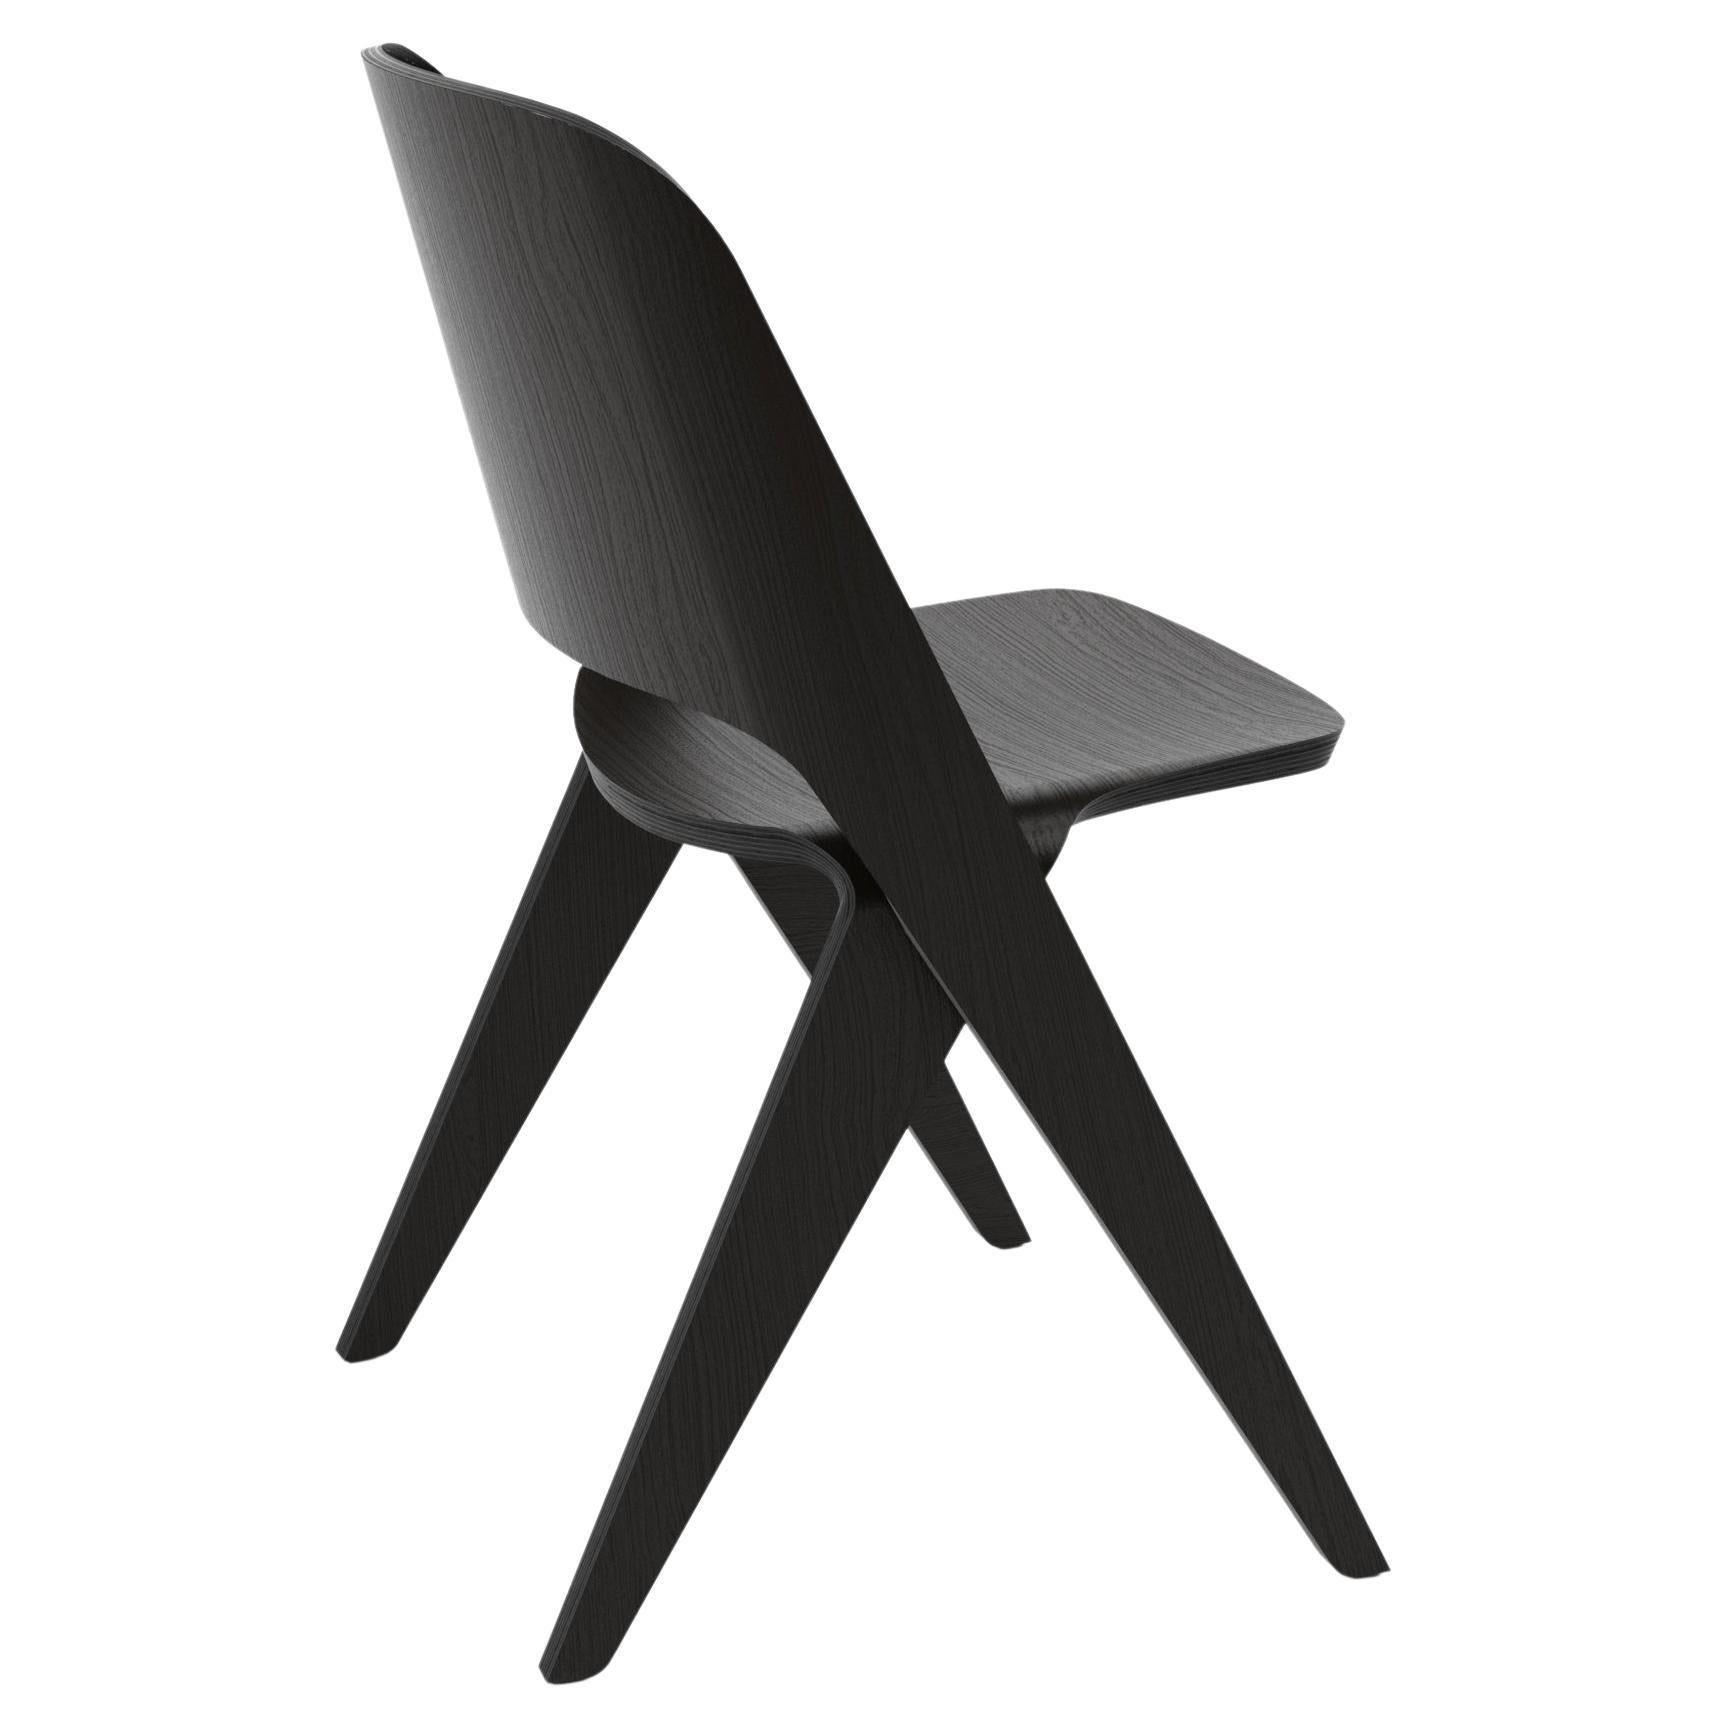 Chaise moderne scandinave « Lavita » de Poiat, en chêne noir